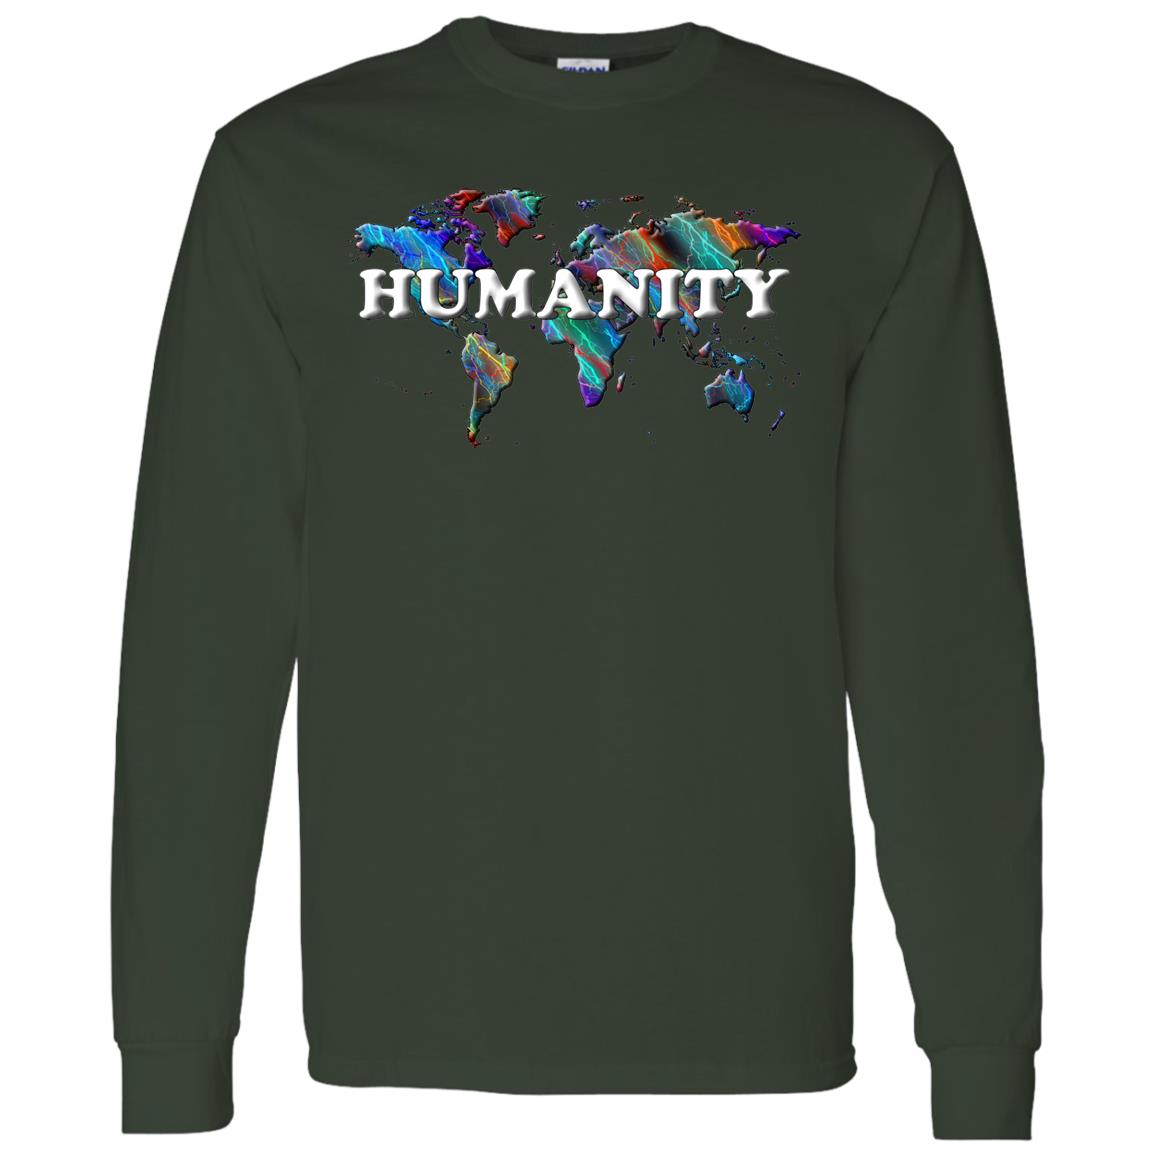 Humanity Long Sleeve T-Shirt